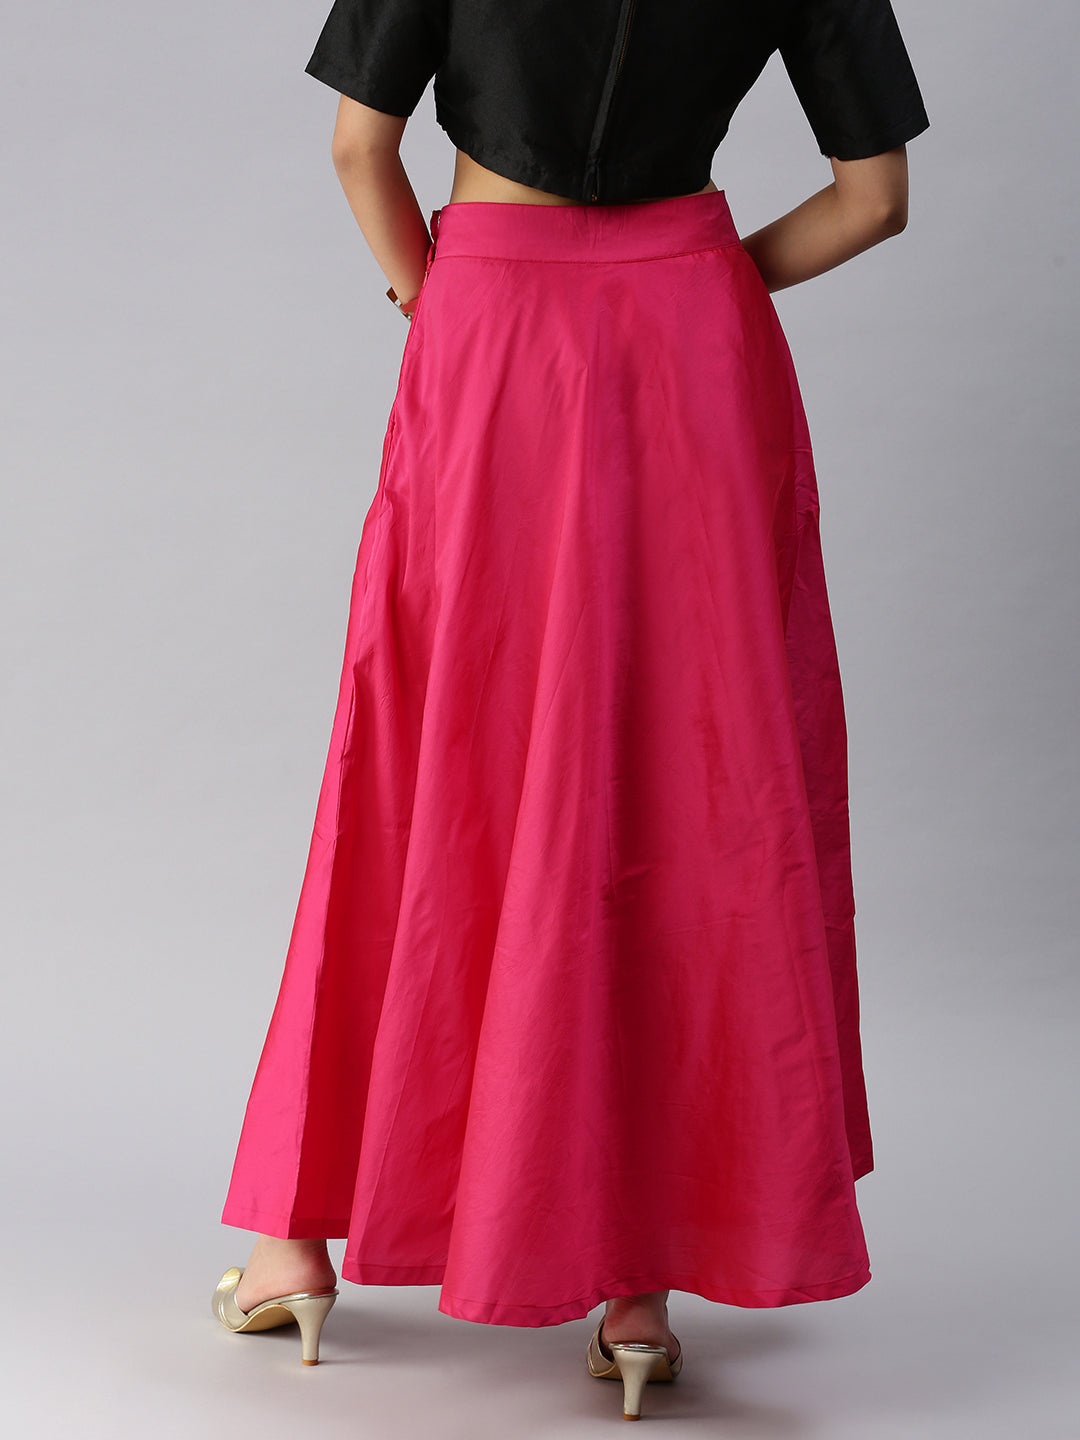 De Moza Women's Skirt Fuchsia